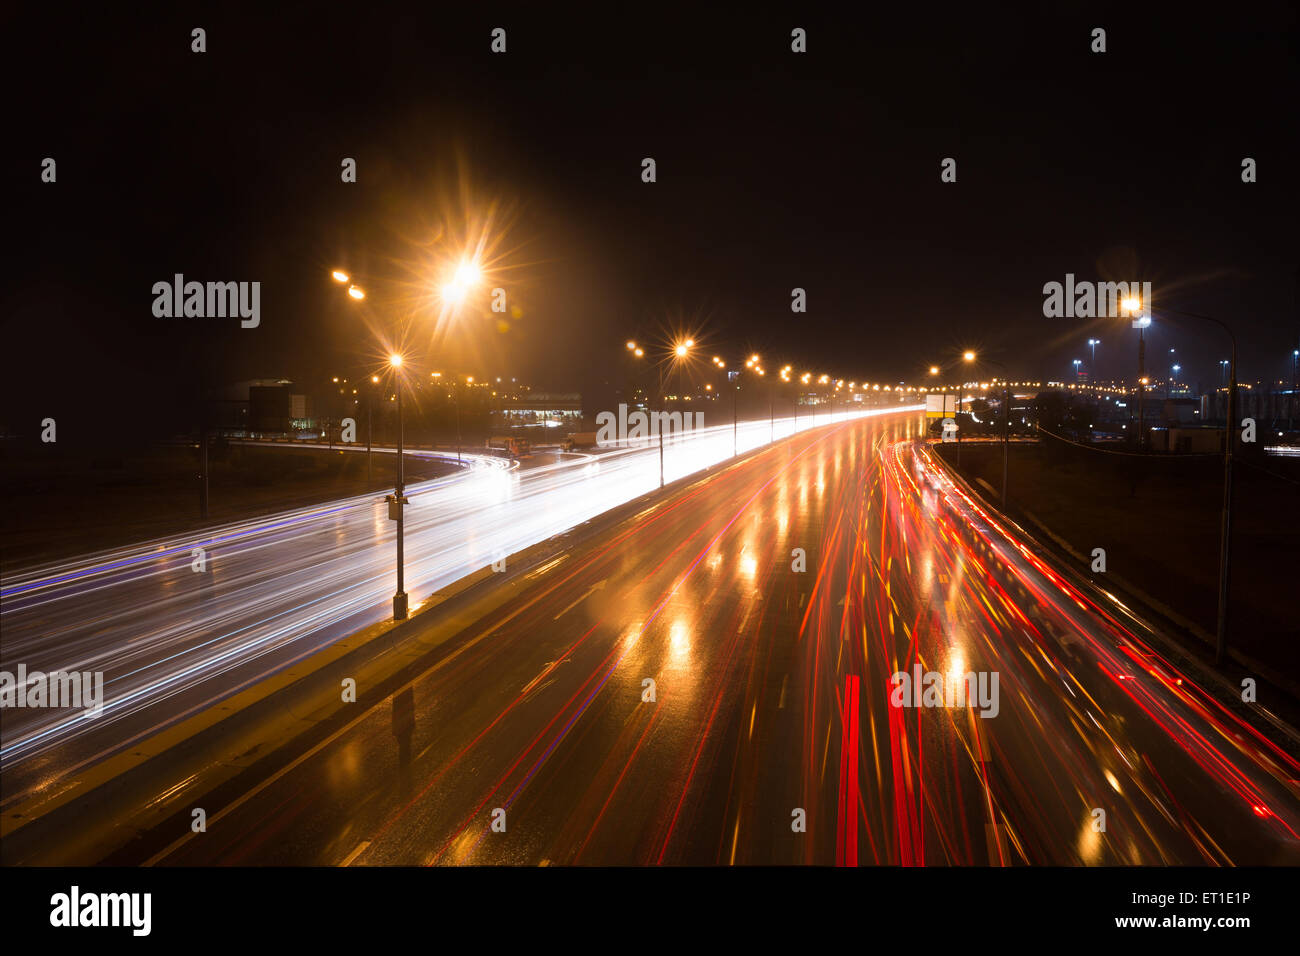 Illuminated highway at night with light trails Stock Photo